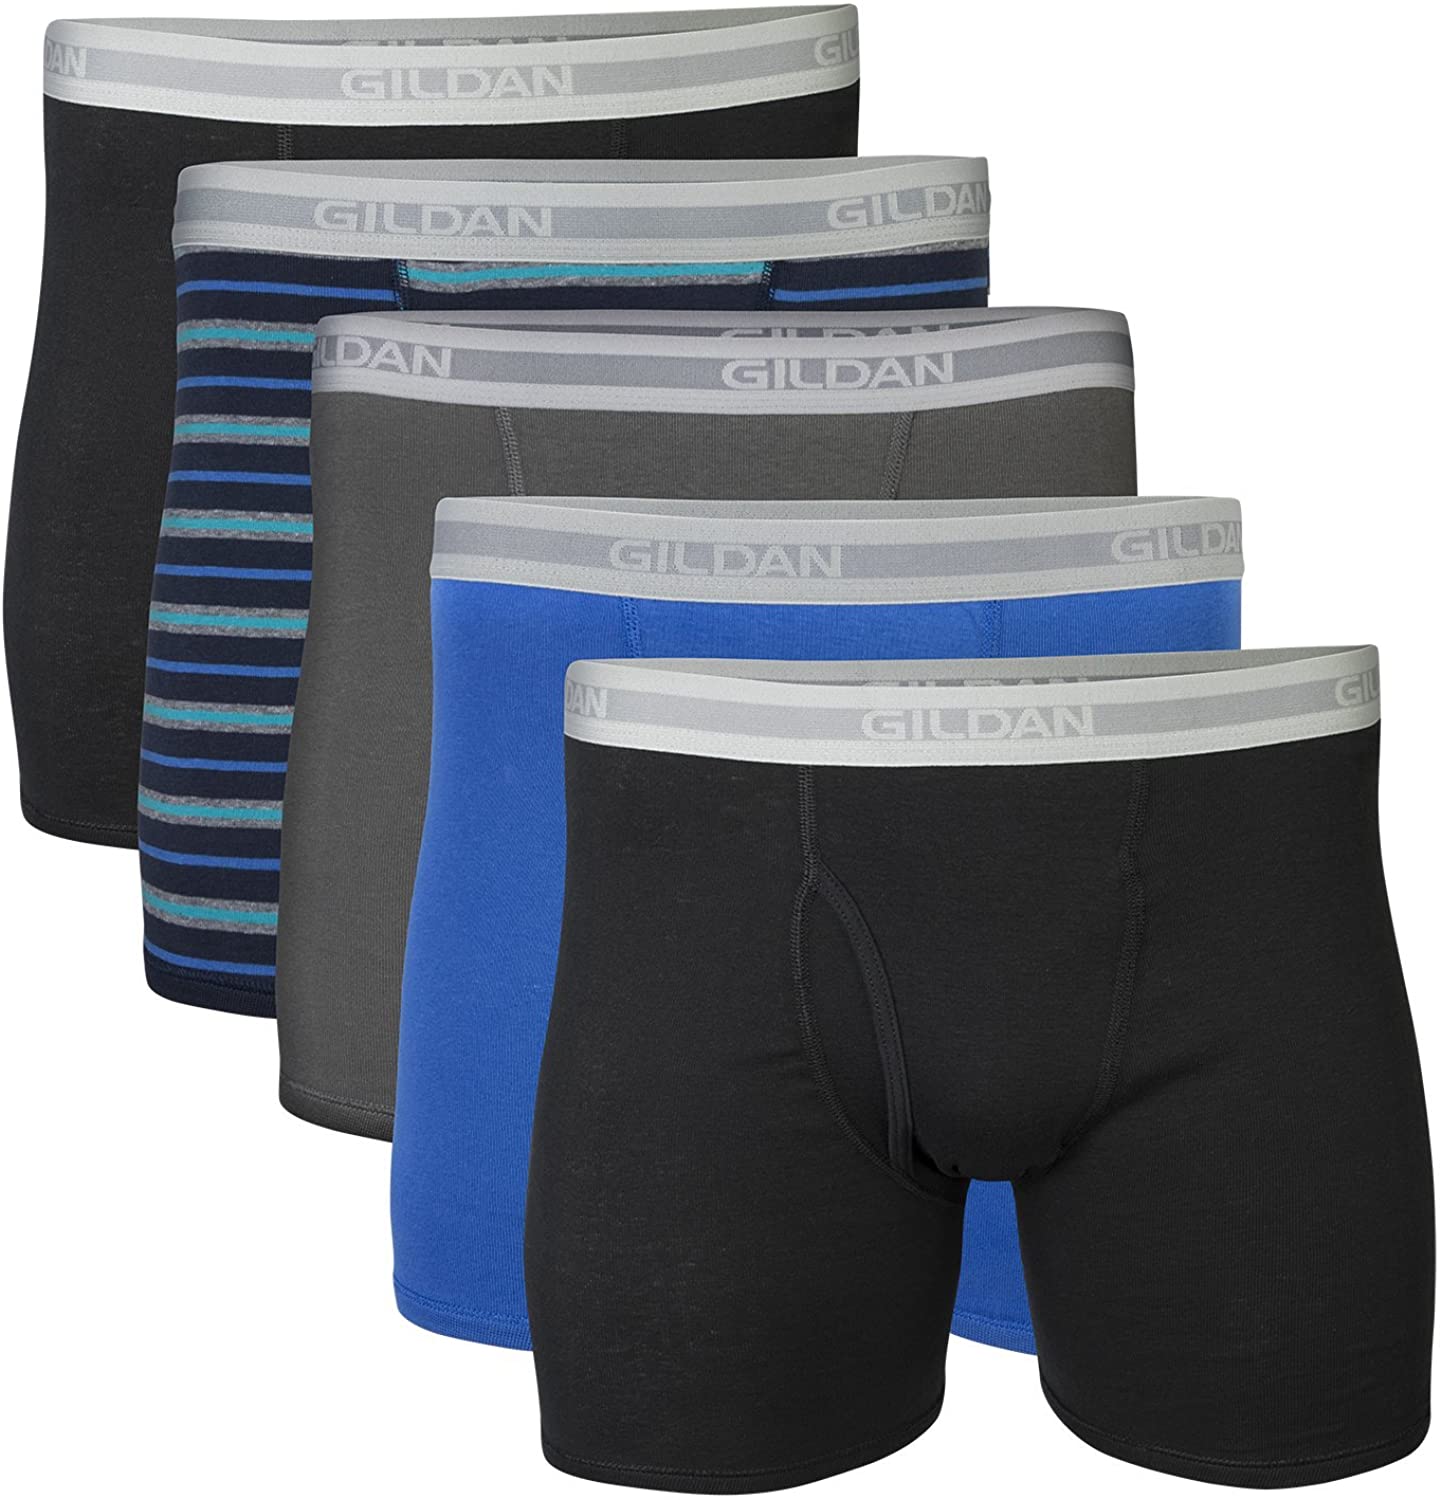 Gildan Mens Underwear Cotton Stretch Boxer Briefs, Multipack